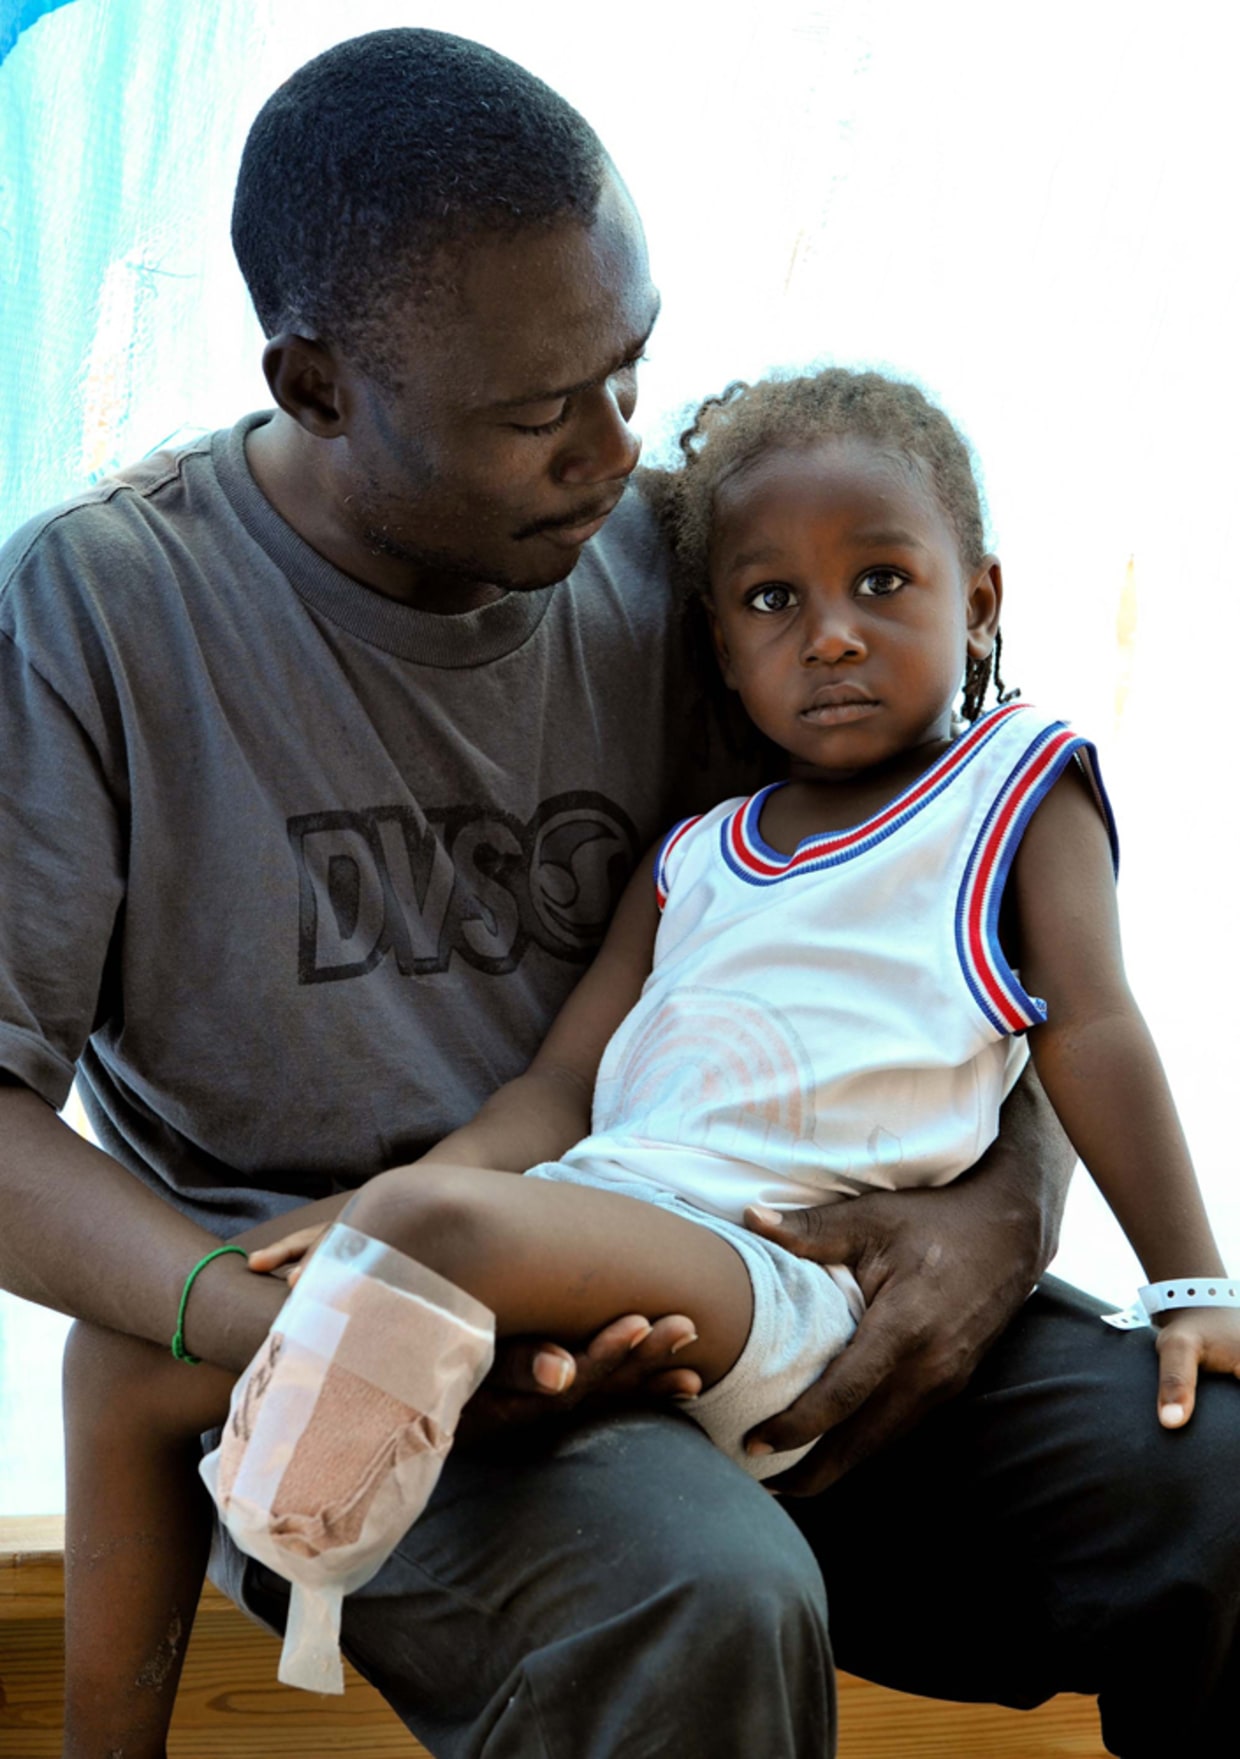 Haiti amputees face dire quest for prosthetics